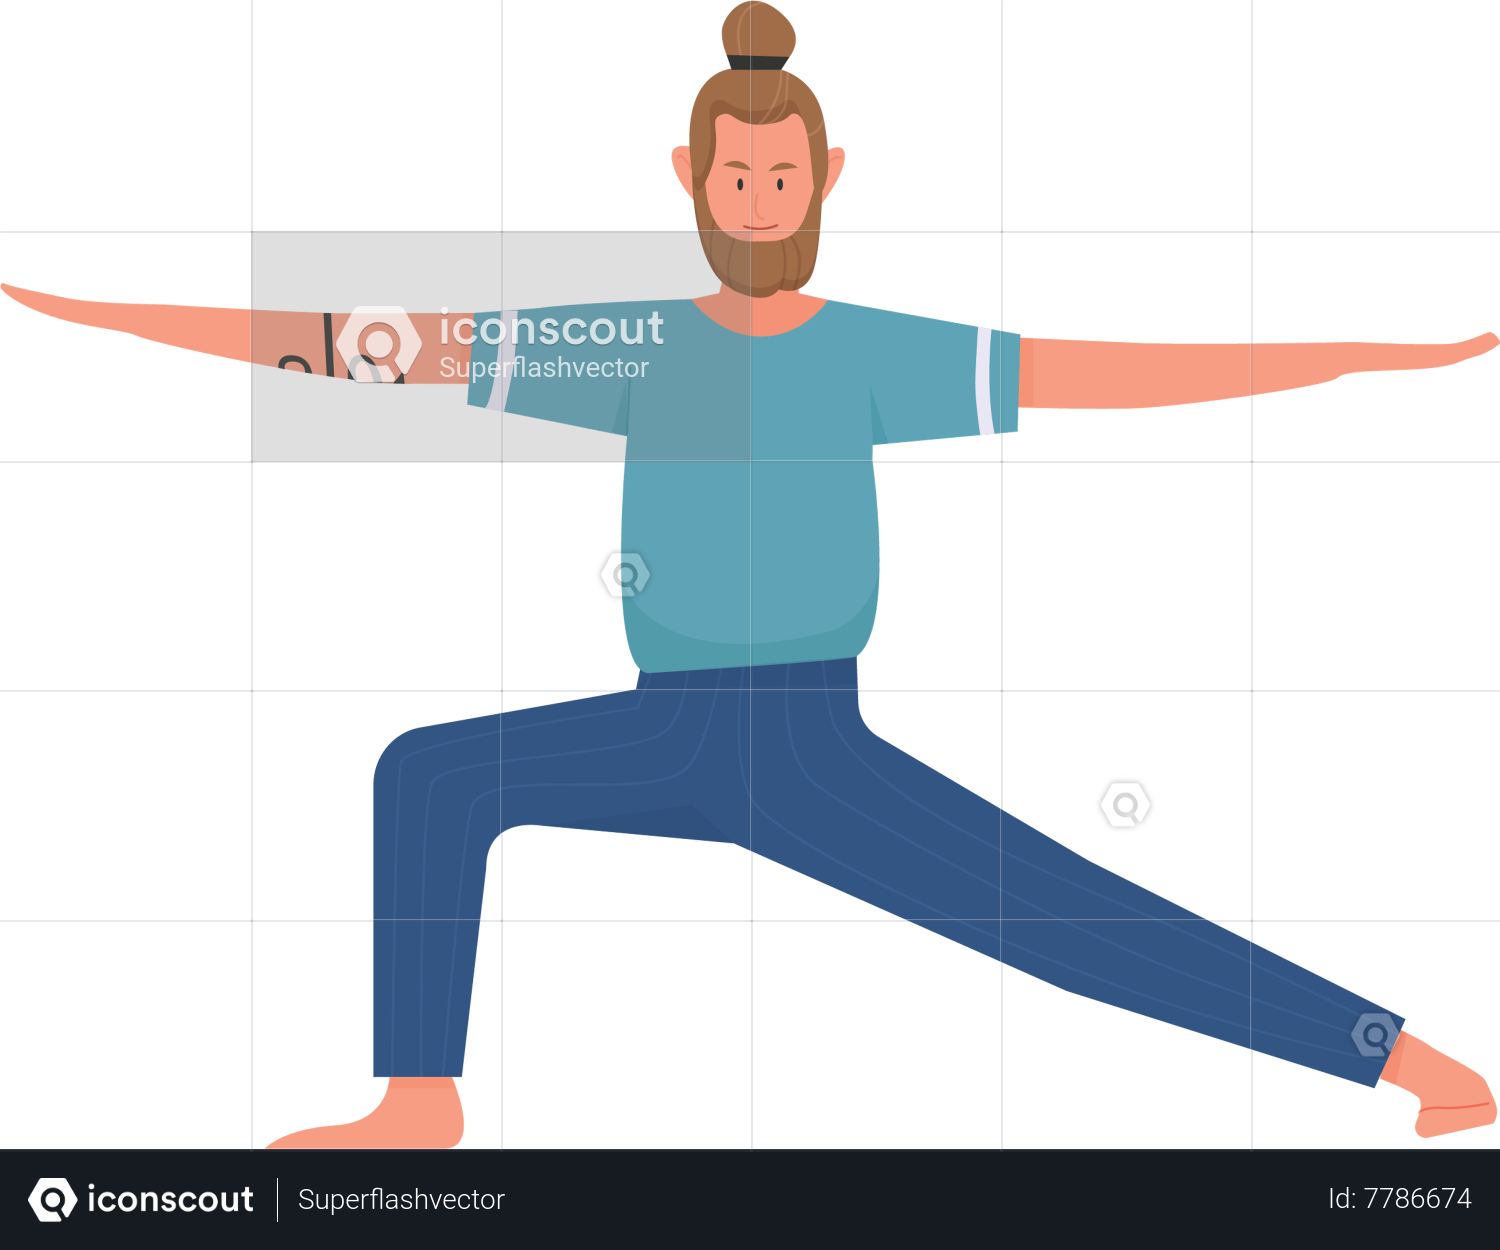 10 Top Tips to Improve Your Yoga Balance Poses - TINT Yoga